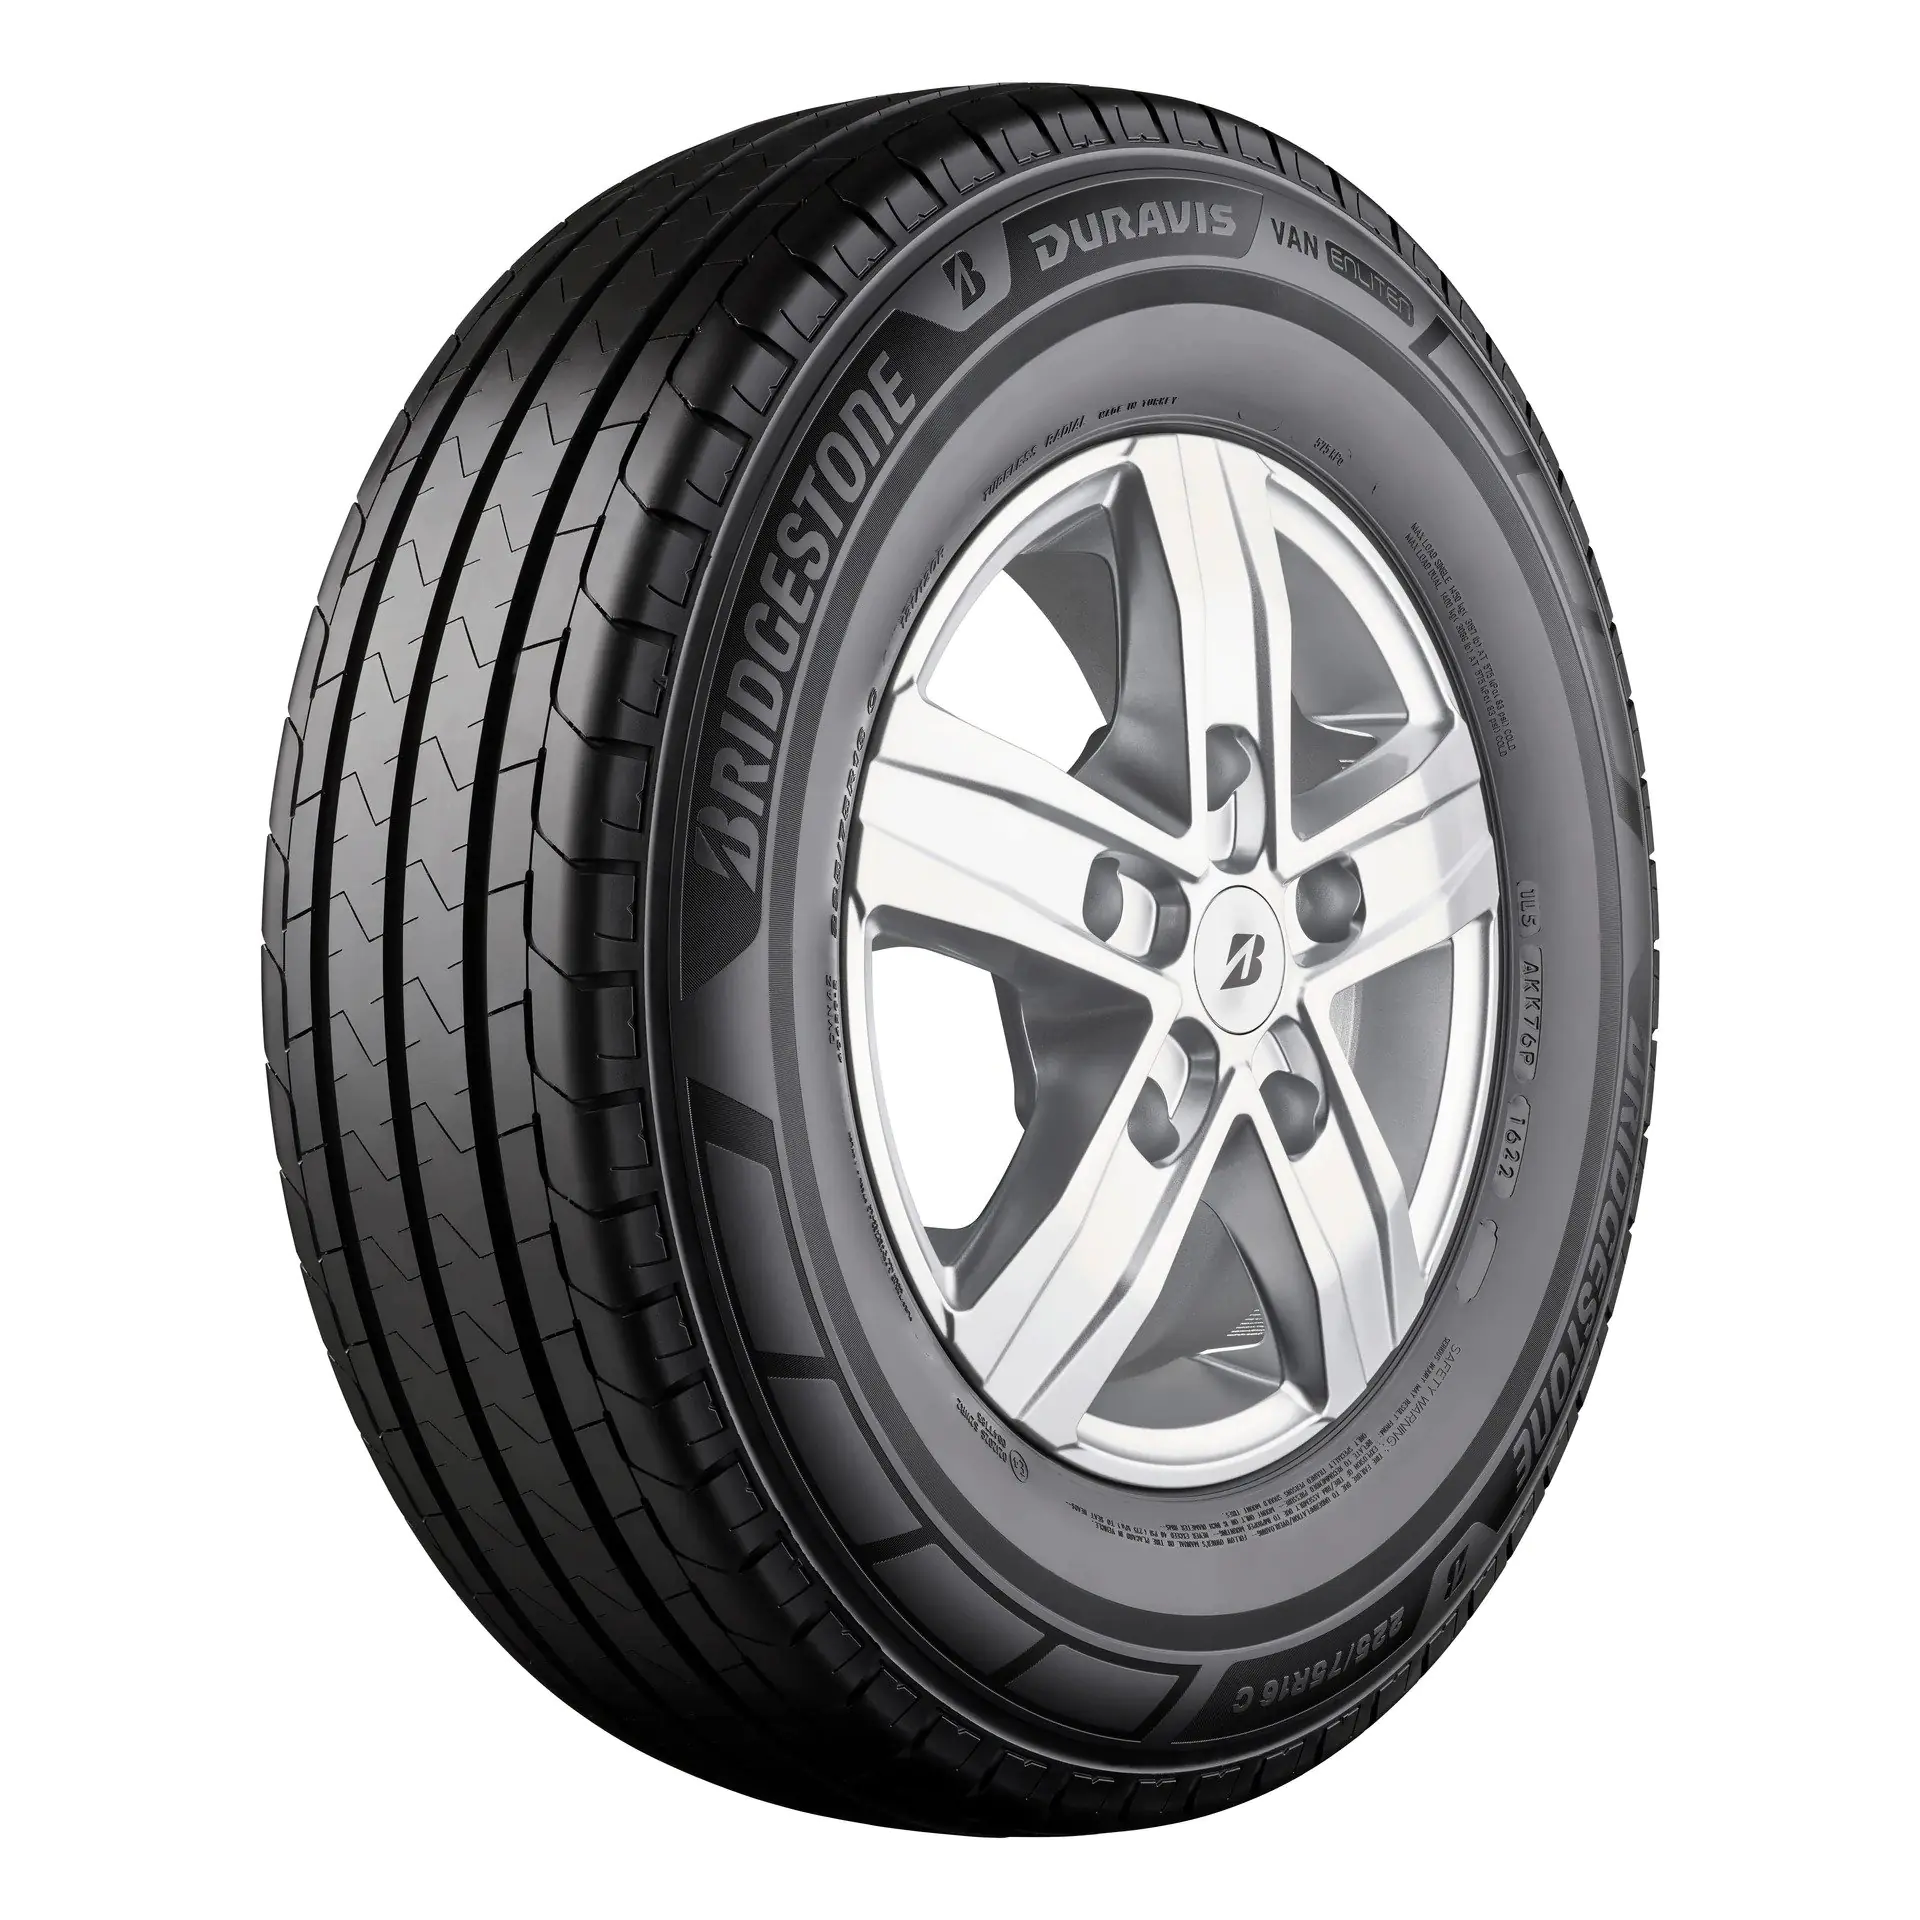 Bridgestone Bridgestone 205/75 R16 110/108R DURAVIS VAN pneumatici nuovi Estivo 